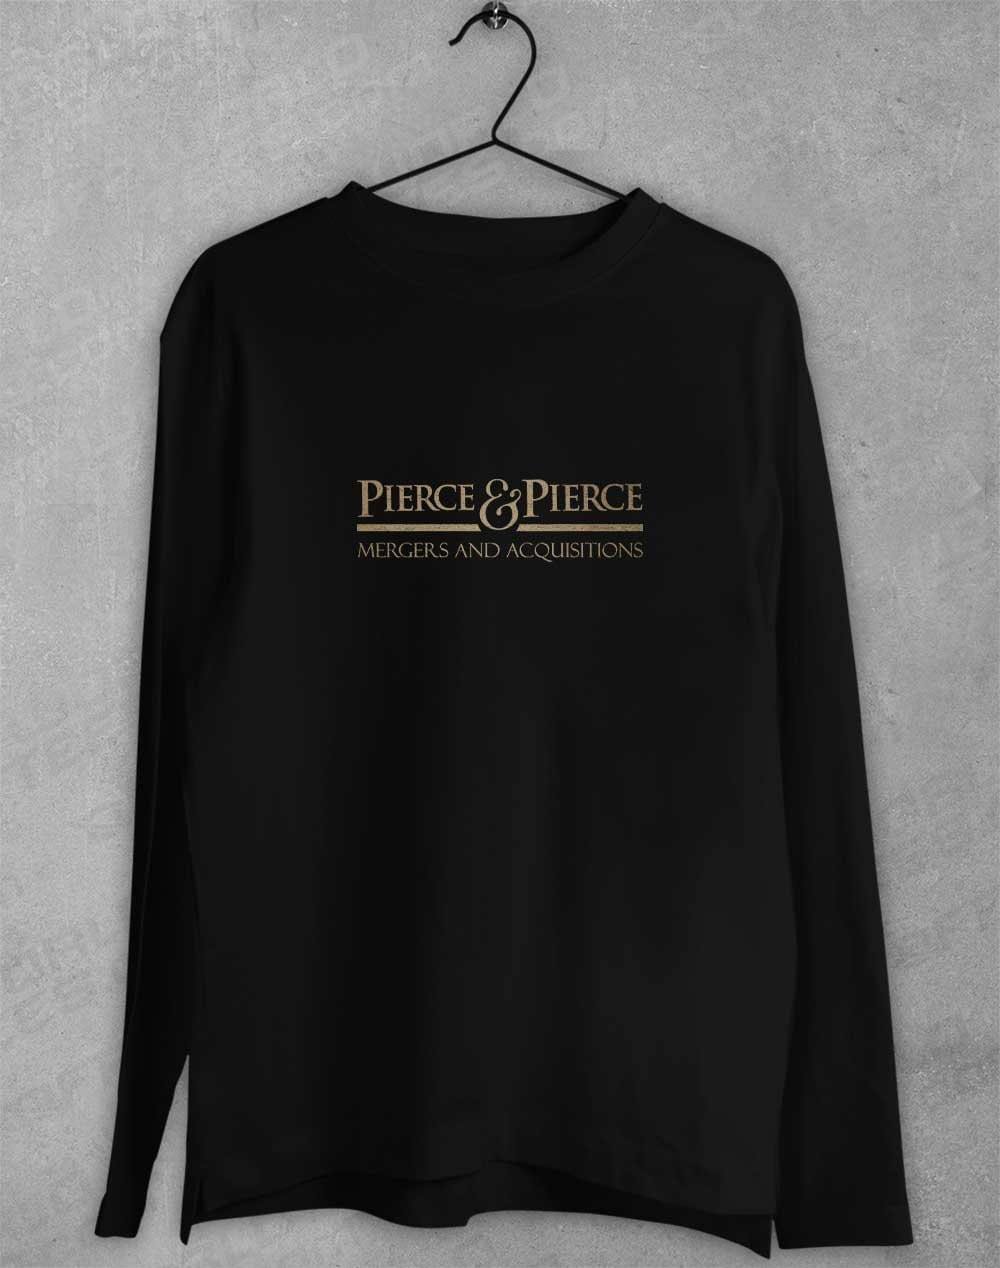 Pierce and Pierce Long Sleeve T-Shirt S / Black  - Off World Tees